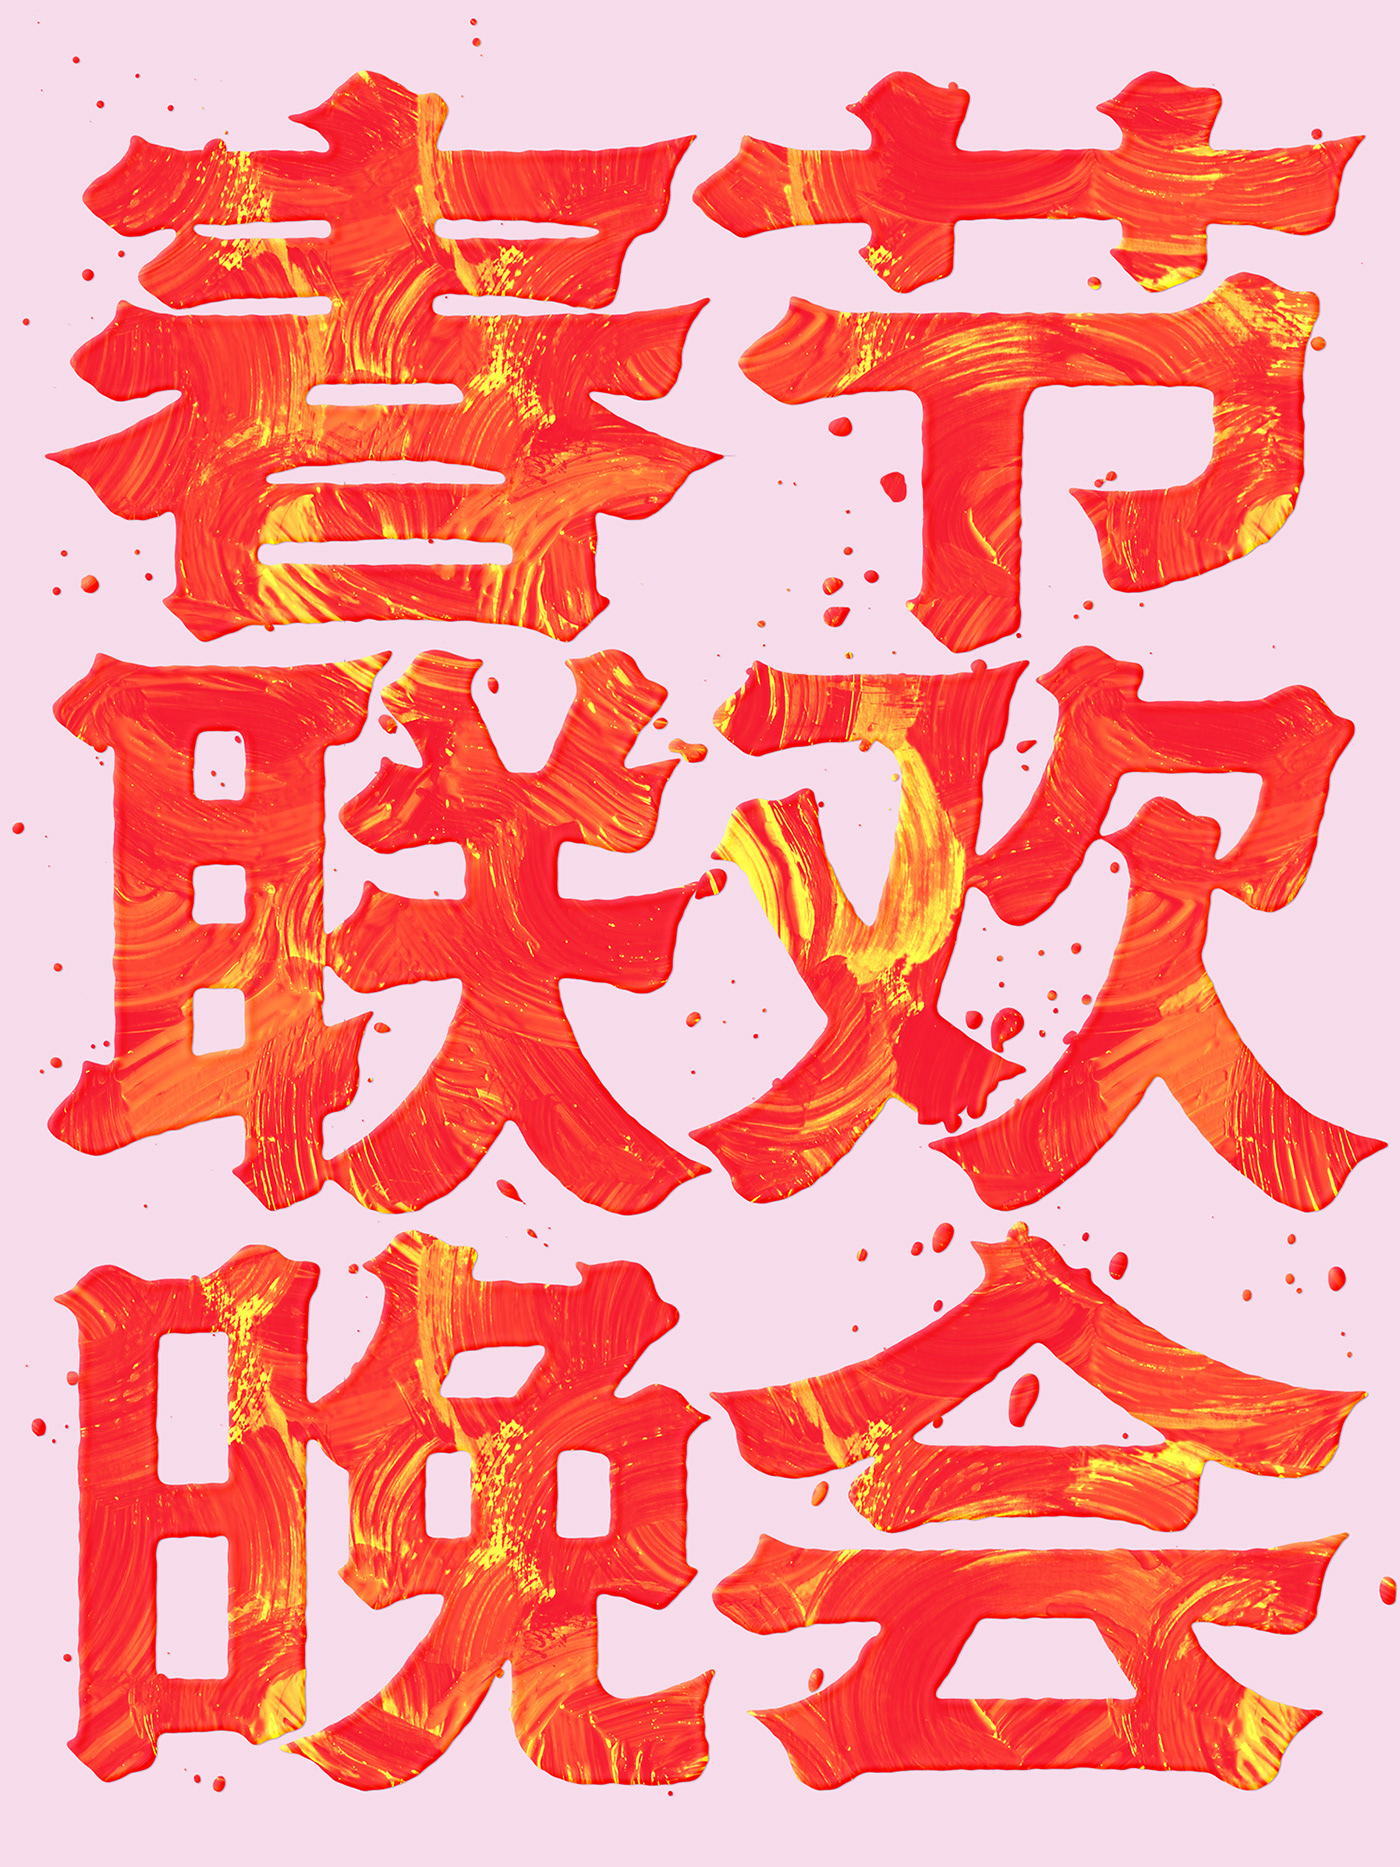 art color lettering logo beijing new year